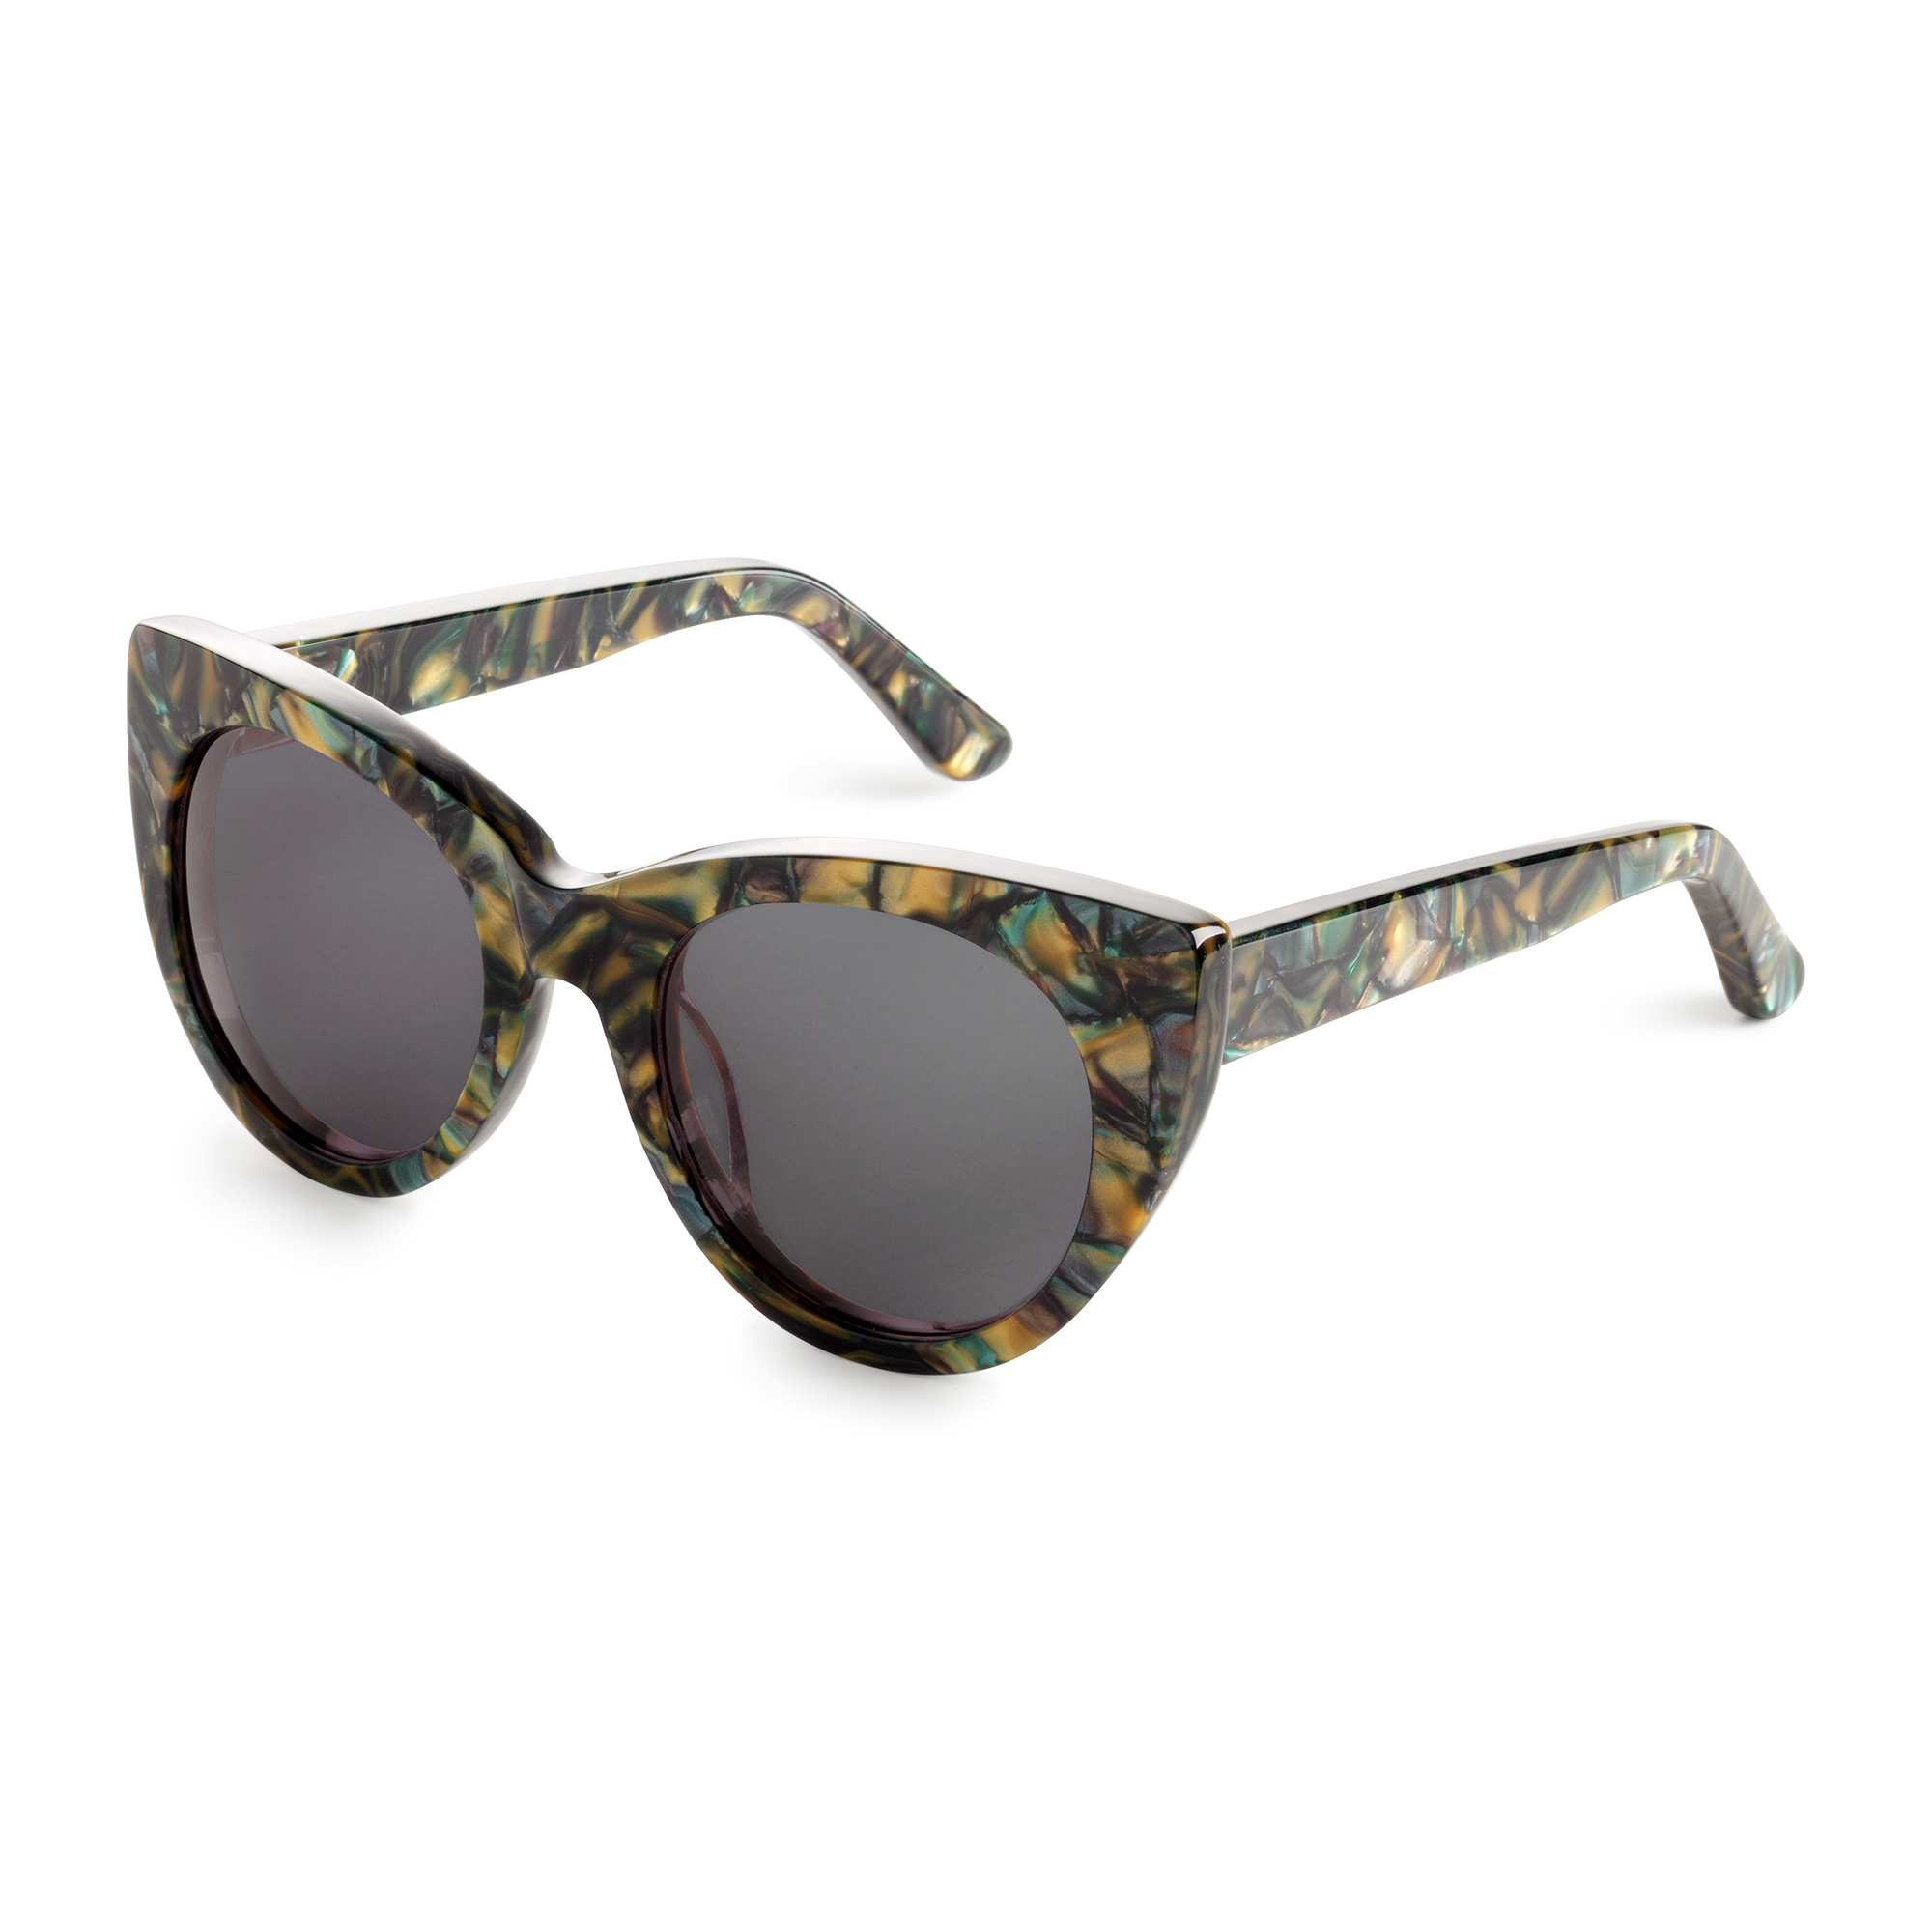 PHOTO: H&M Sunglasses, $24.95